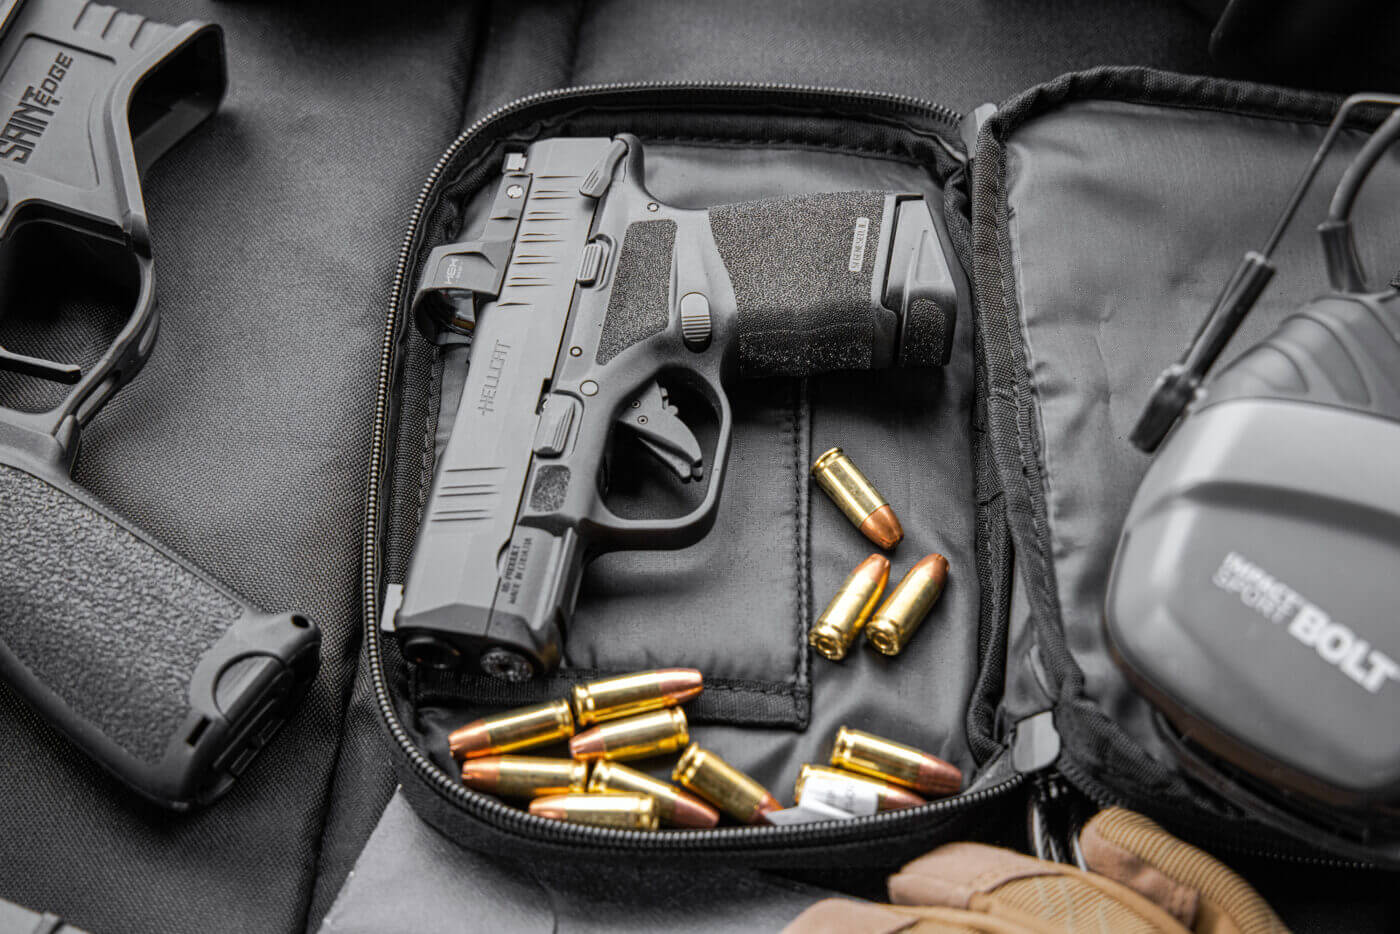 Springfield Hellcat pistol in discreet carry case